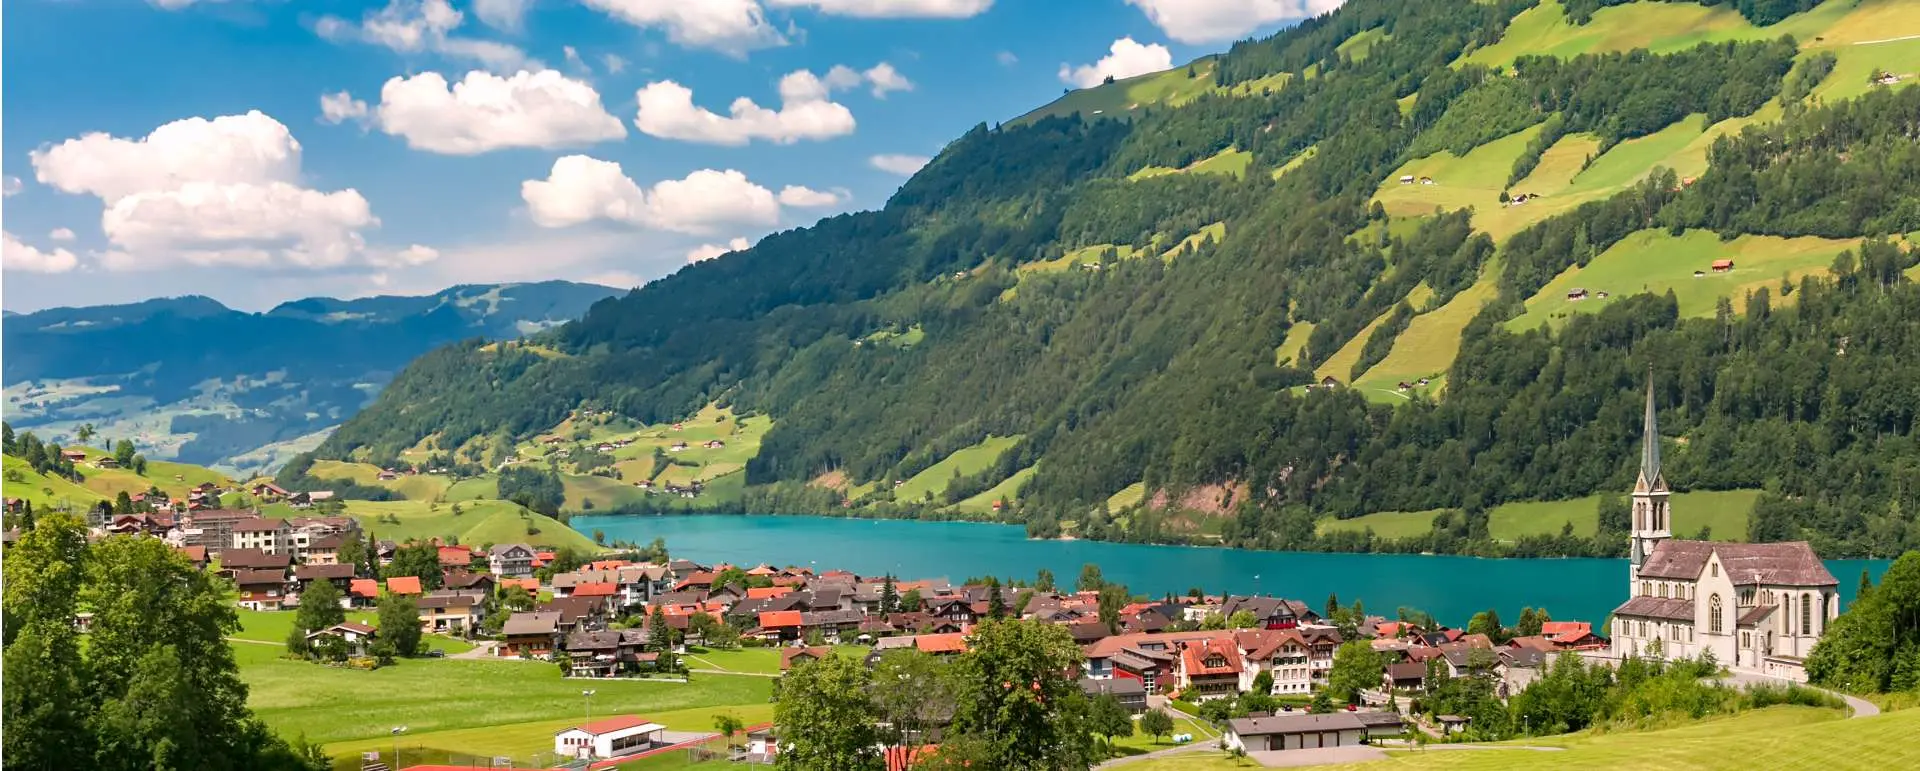 Obwalden - the destination for families